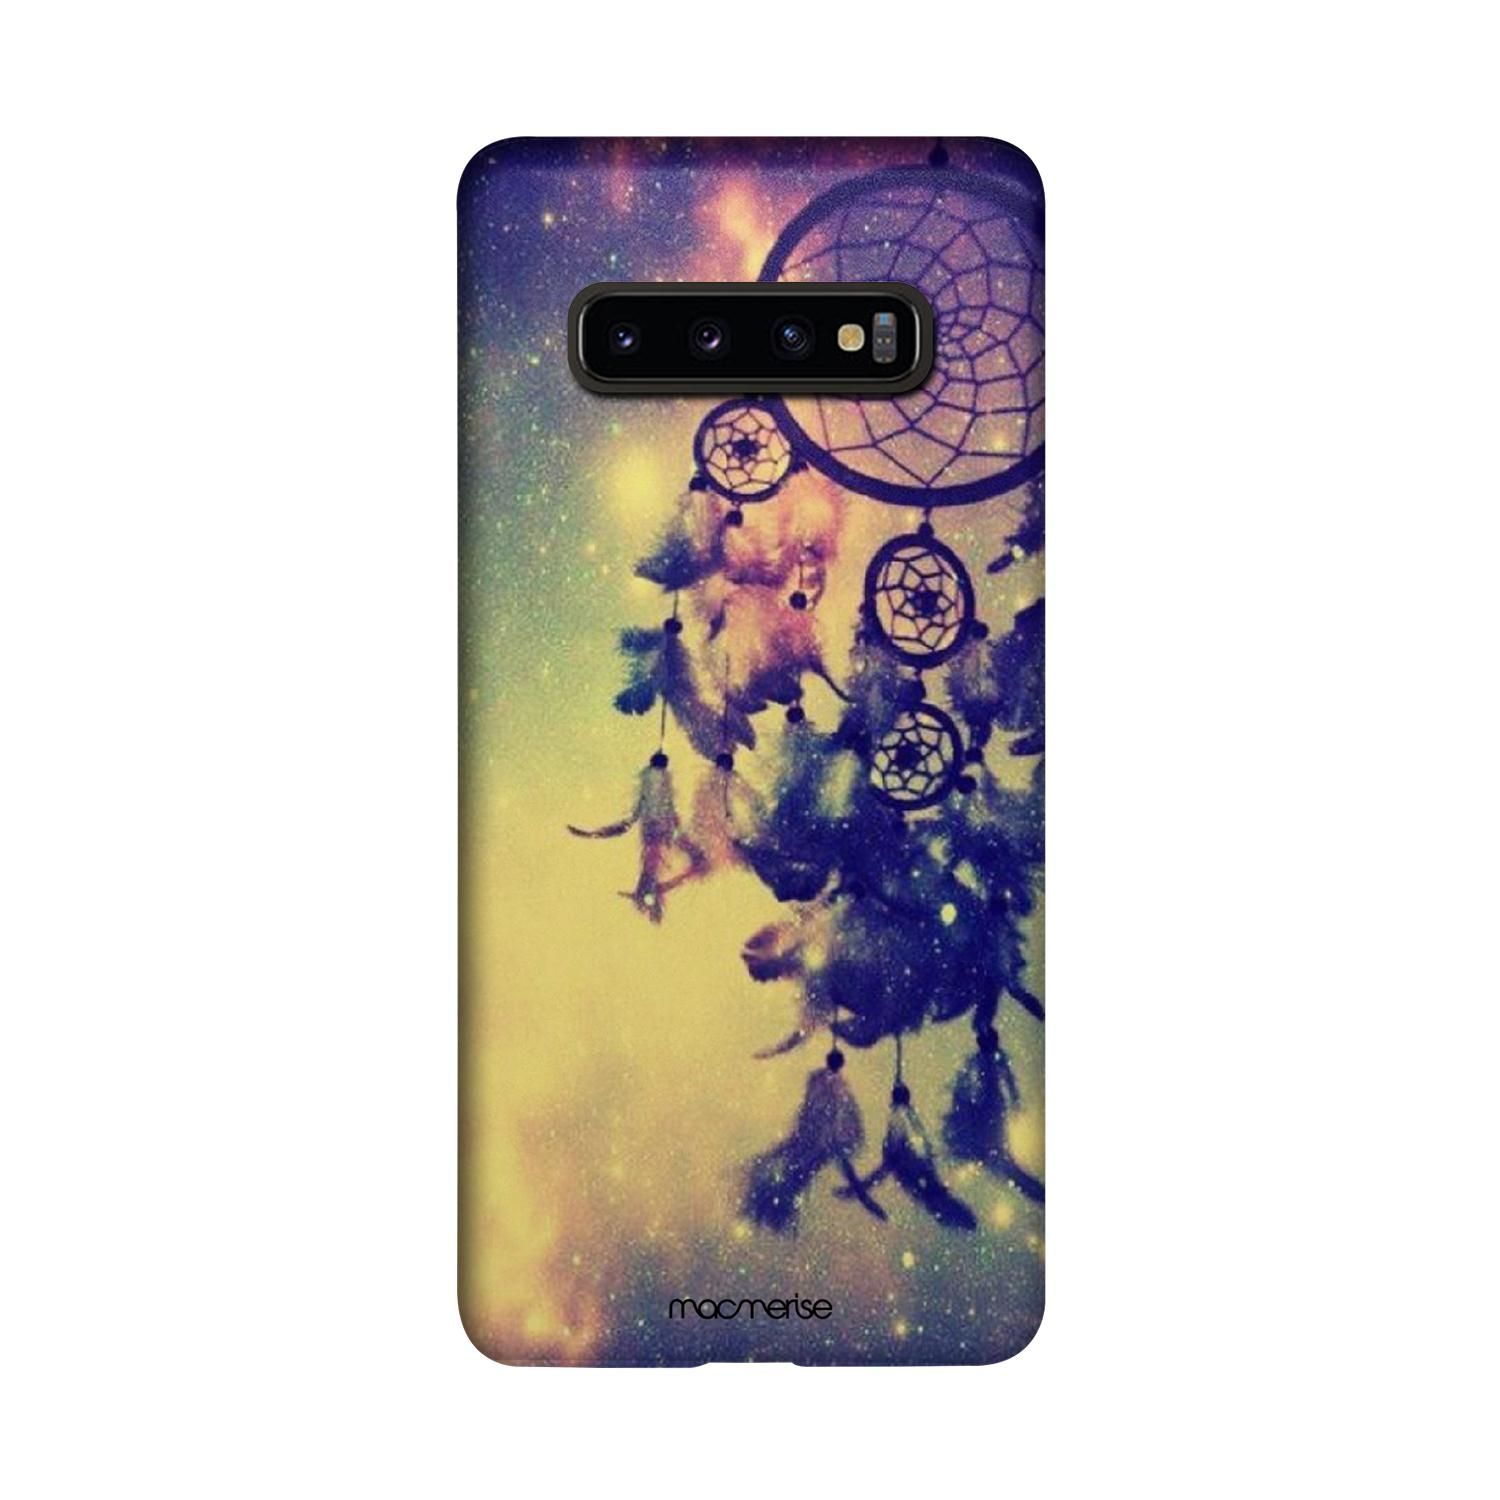 Galaxy Motif - Sleek Phone Case for Samsung S10 Plus